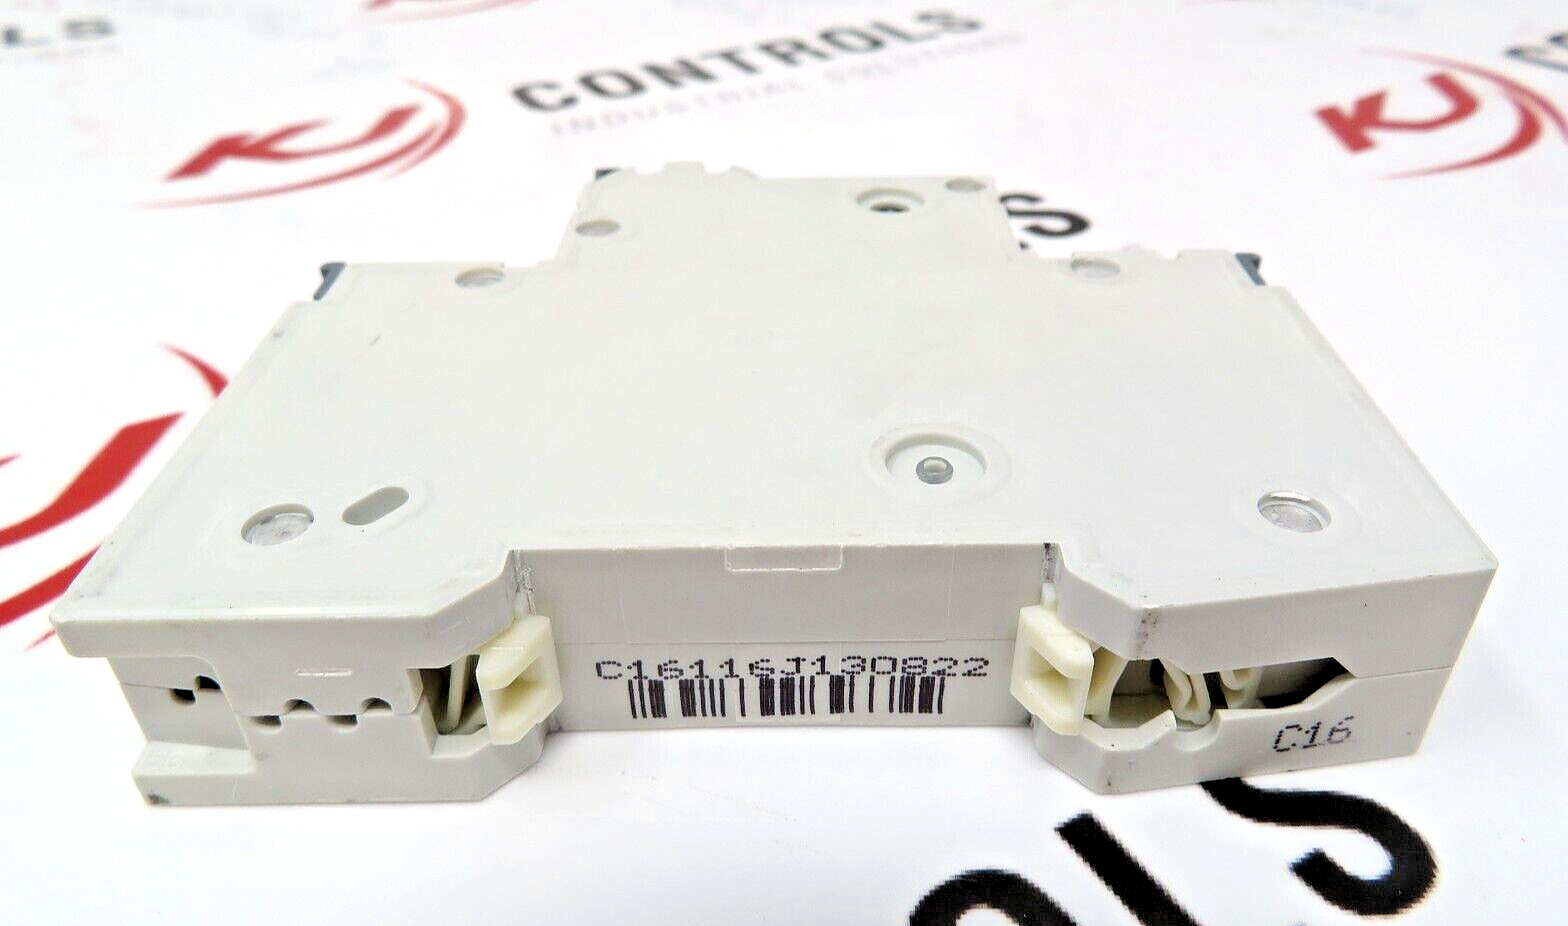 Siemens 5SY6116-7 Miniature Circuit Breaker 16A 1-Pole 230/400VAC DIN Rail Mount